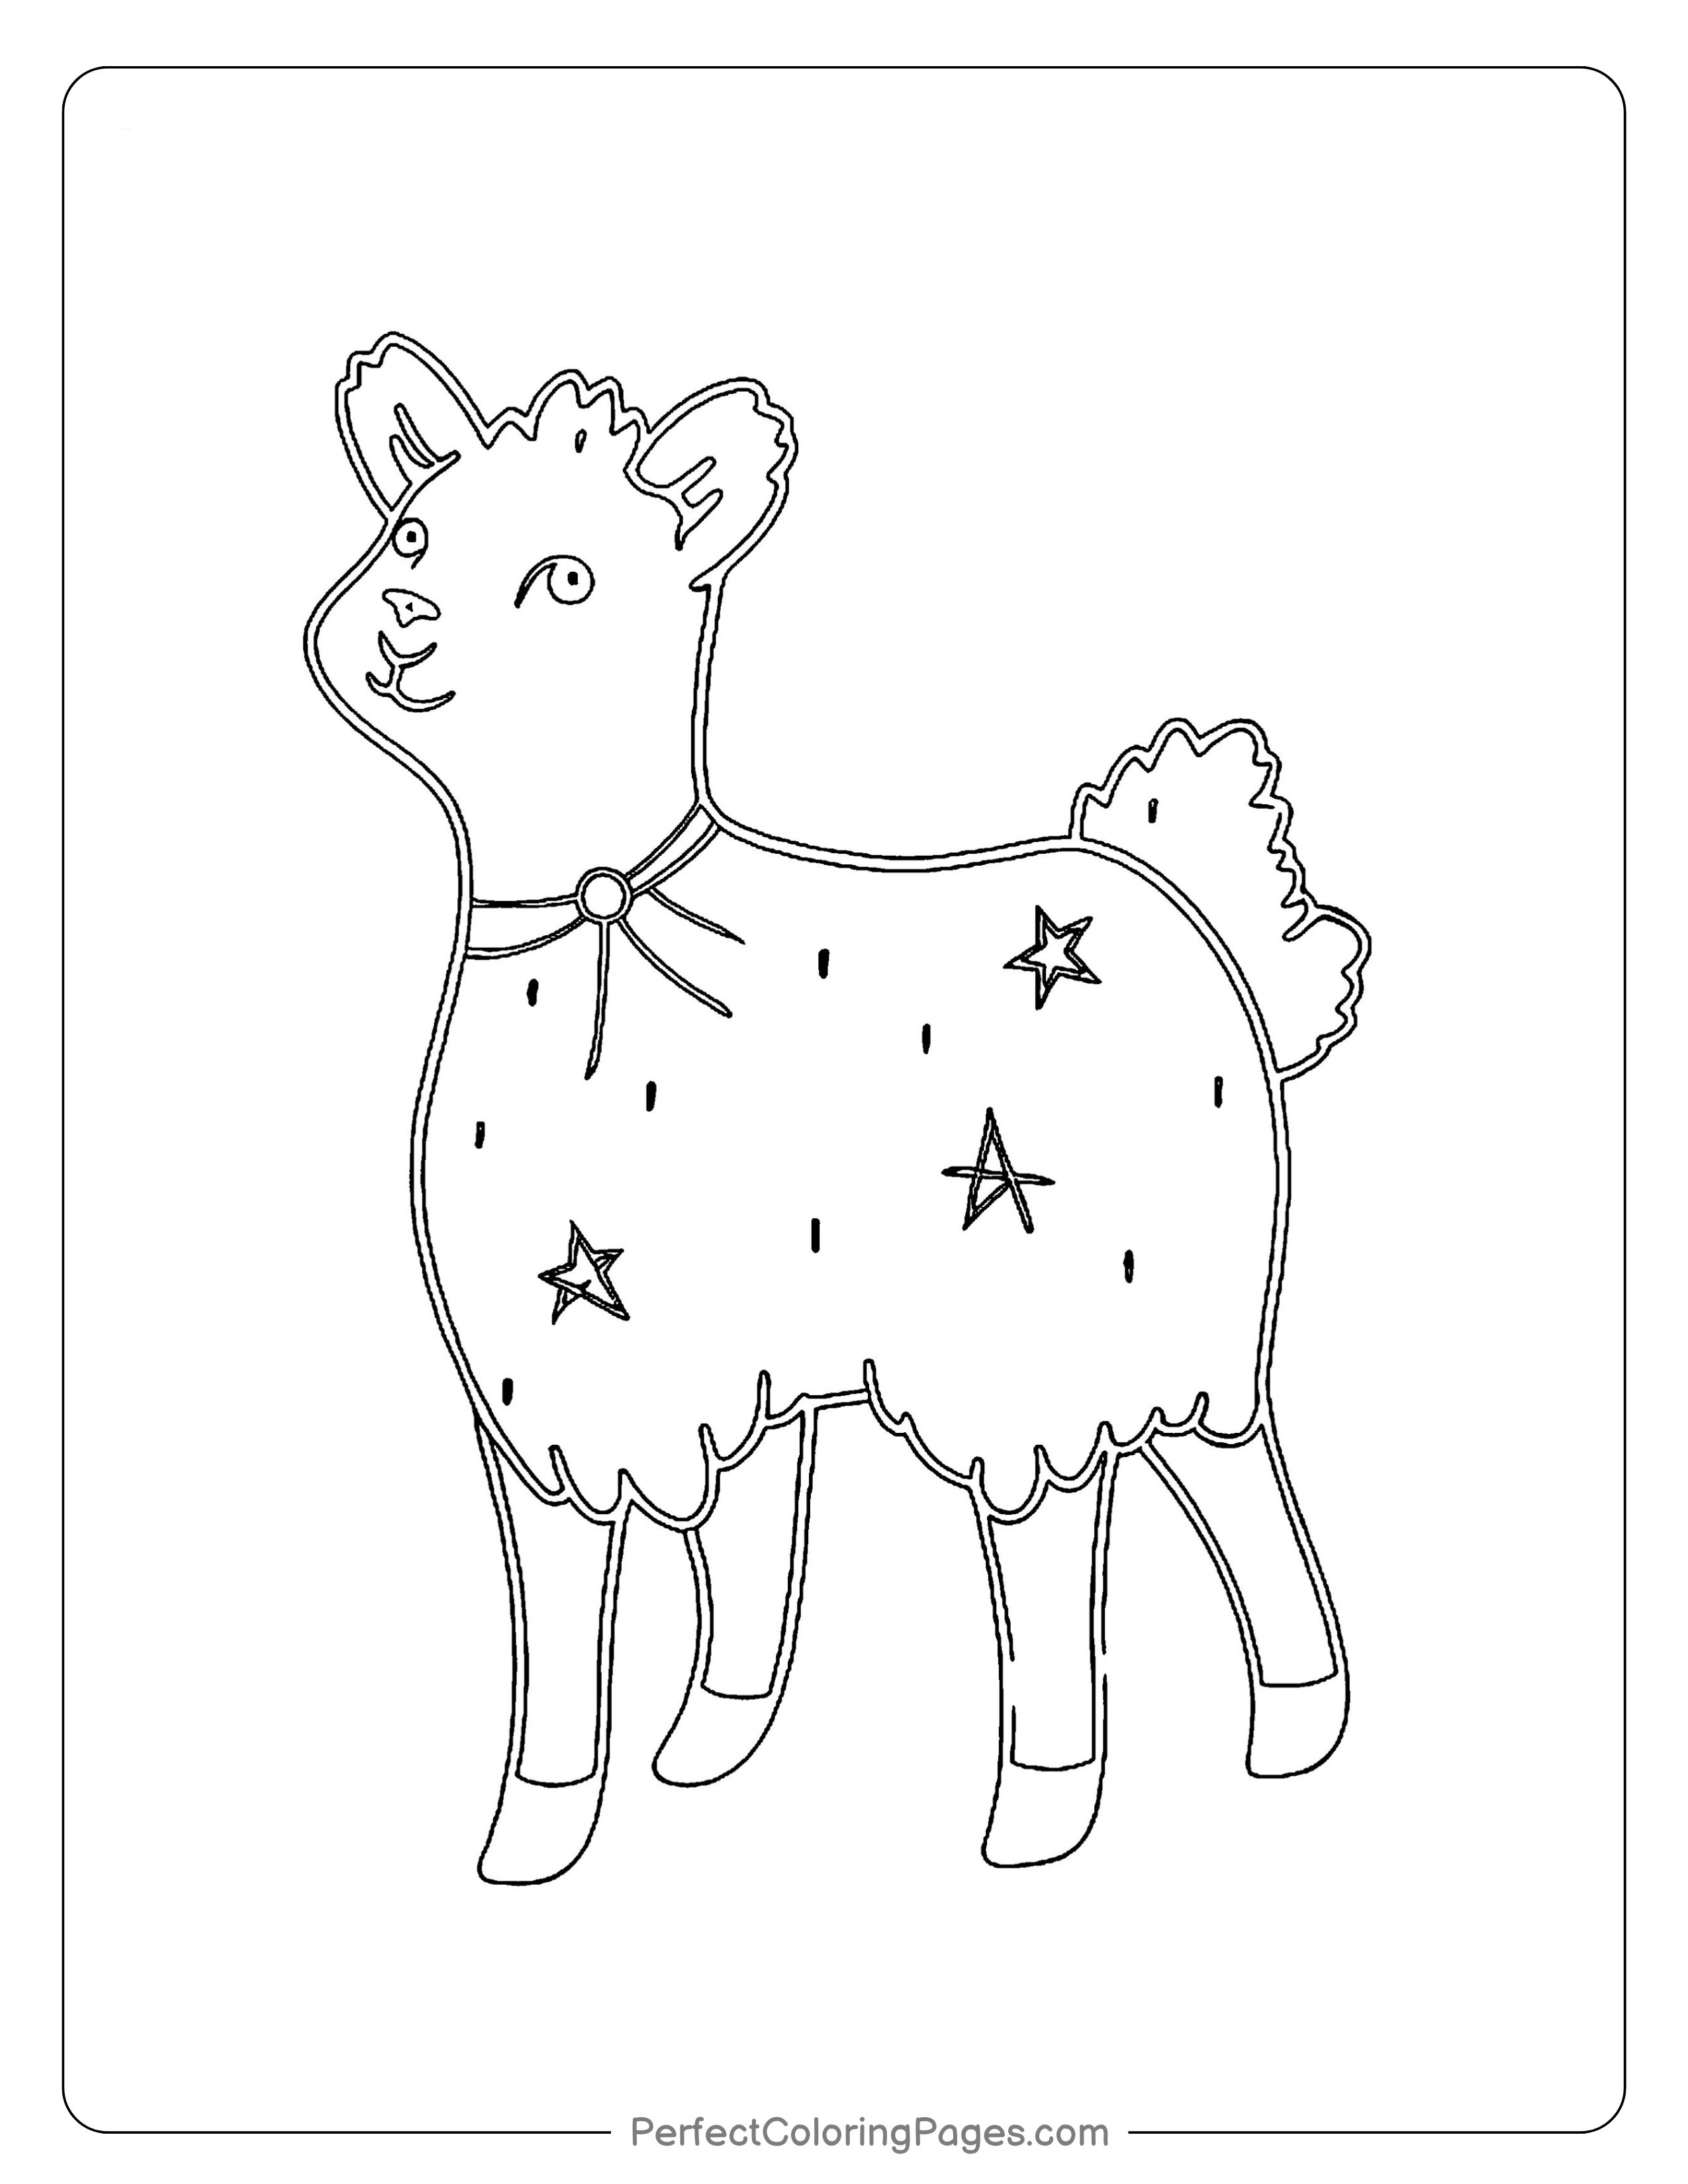 Simple minimalist alpaca coloring sheet